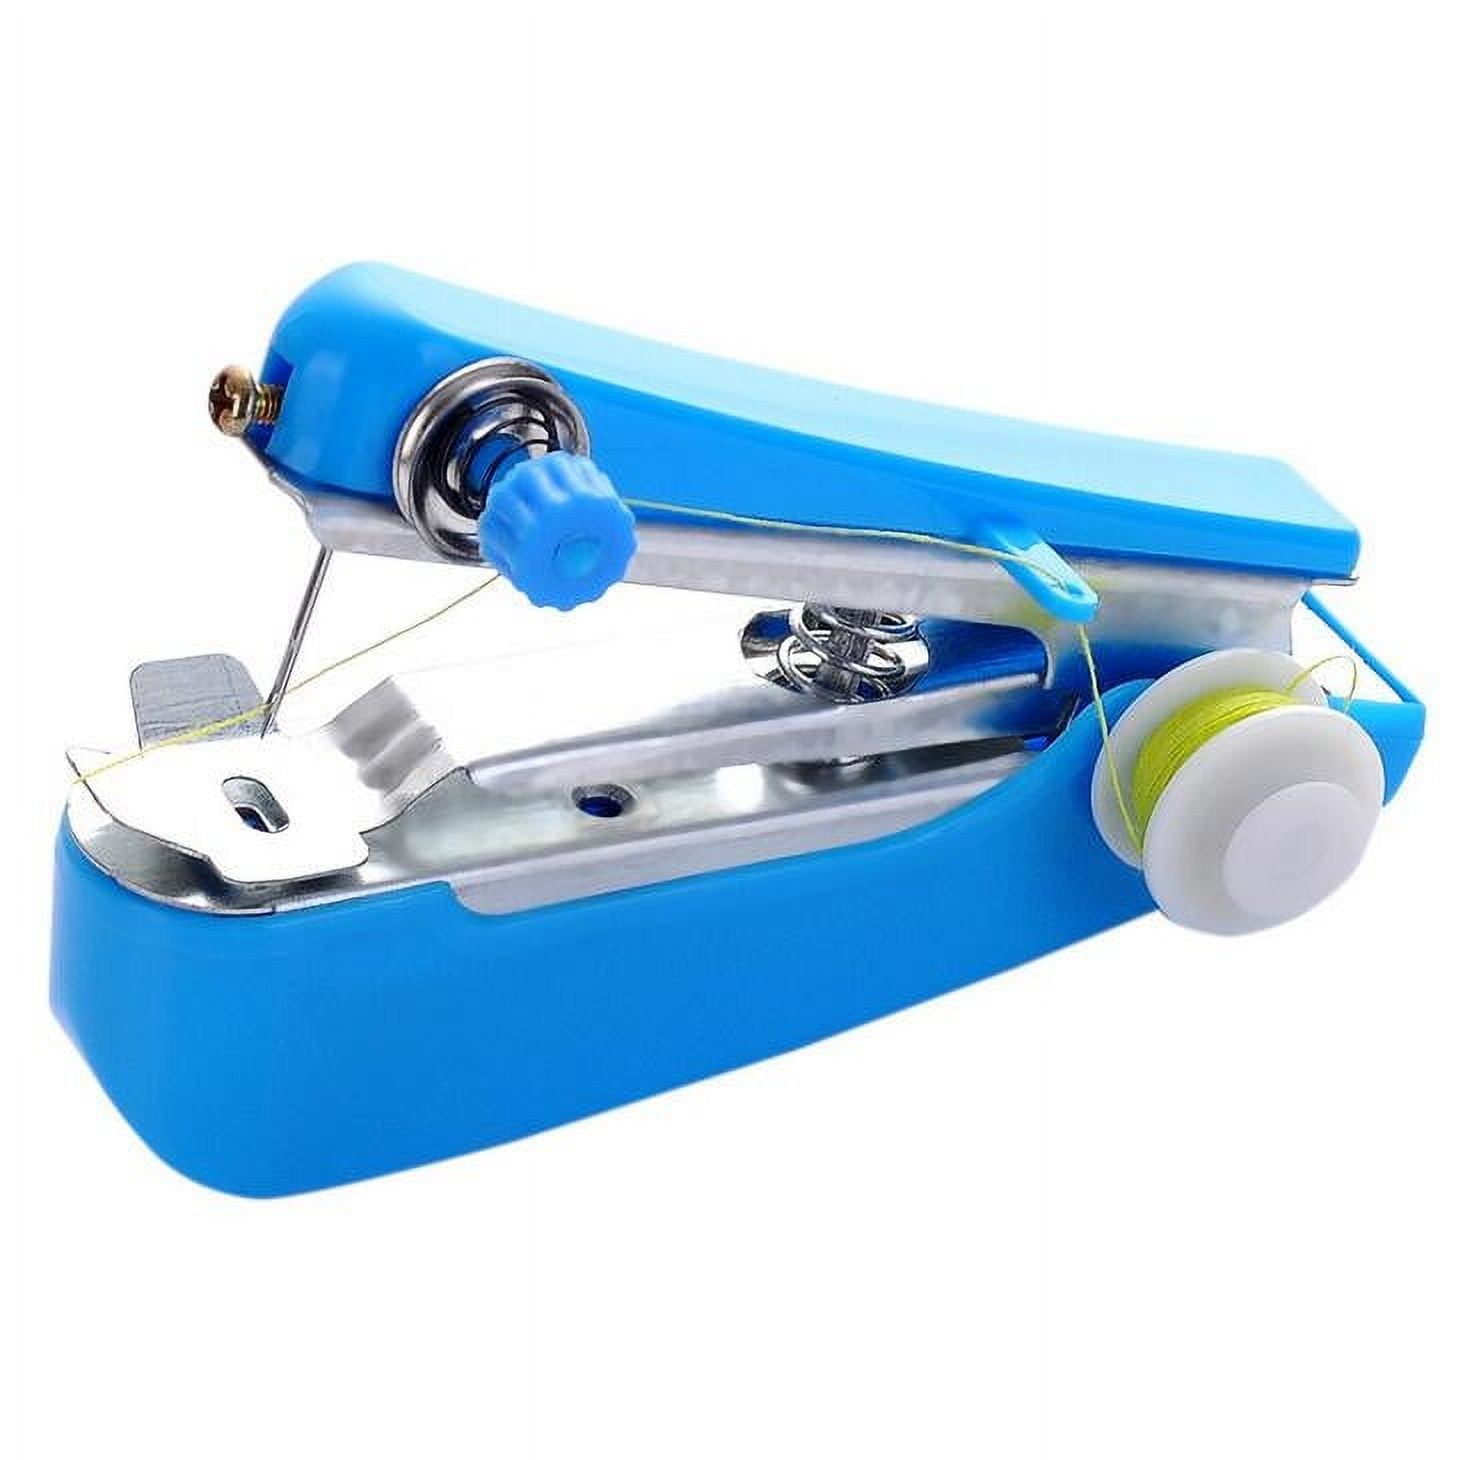 Craftbud Mini Portable Sewing Machine Kit for Beginner Kids (122 Piece)